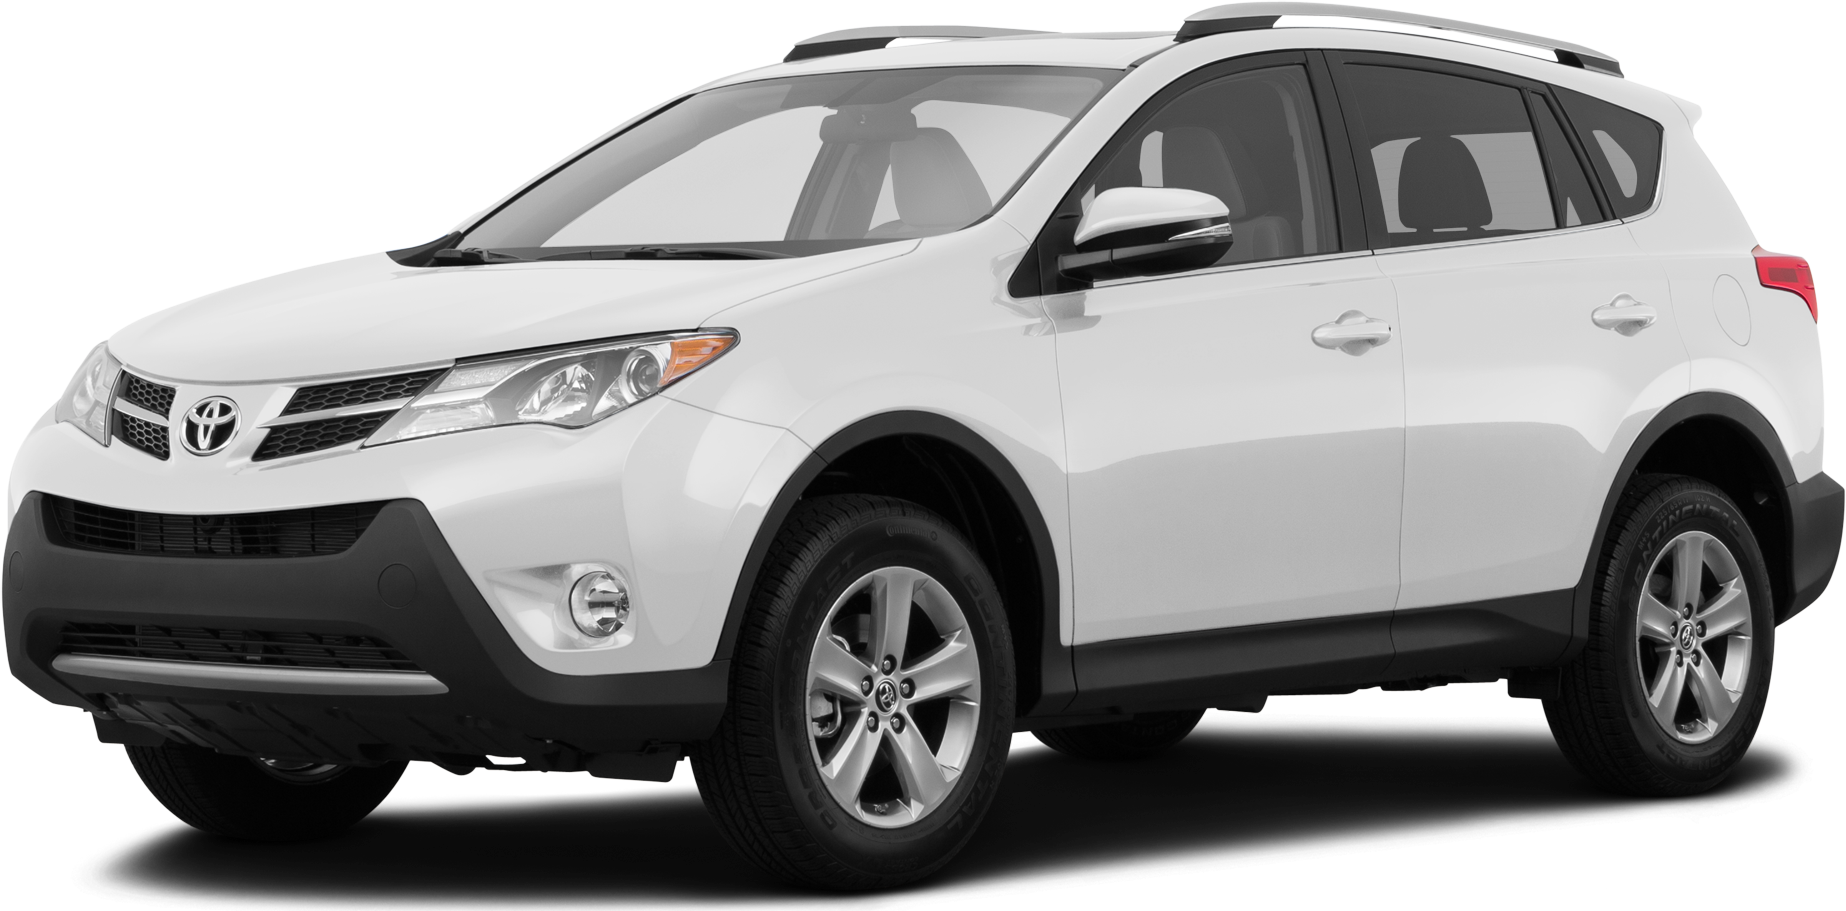 2015 Toyota RAV4 Values & Cars for Sale | Kelley Blue Book